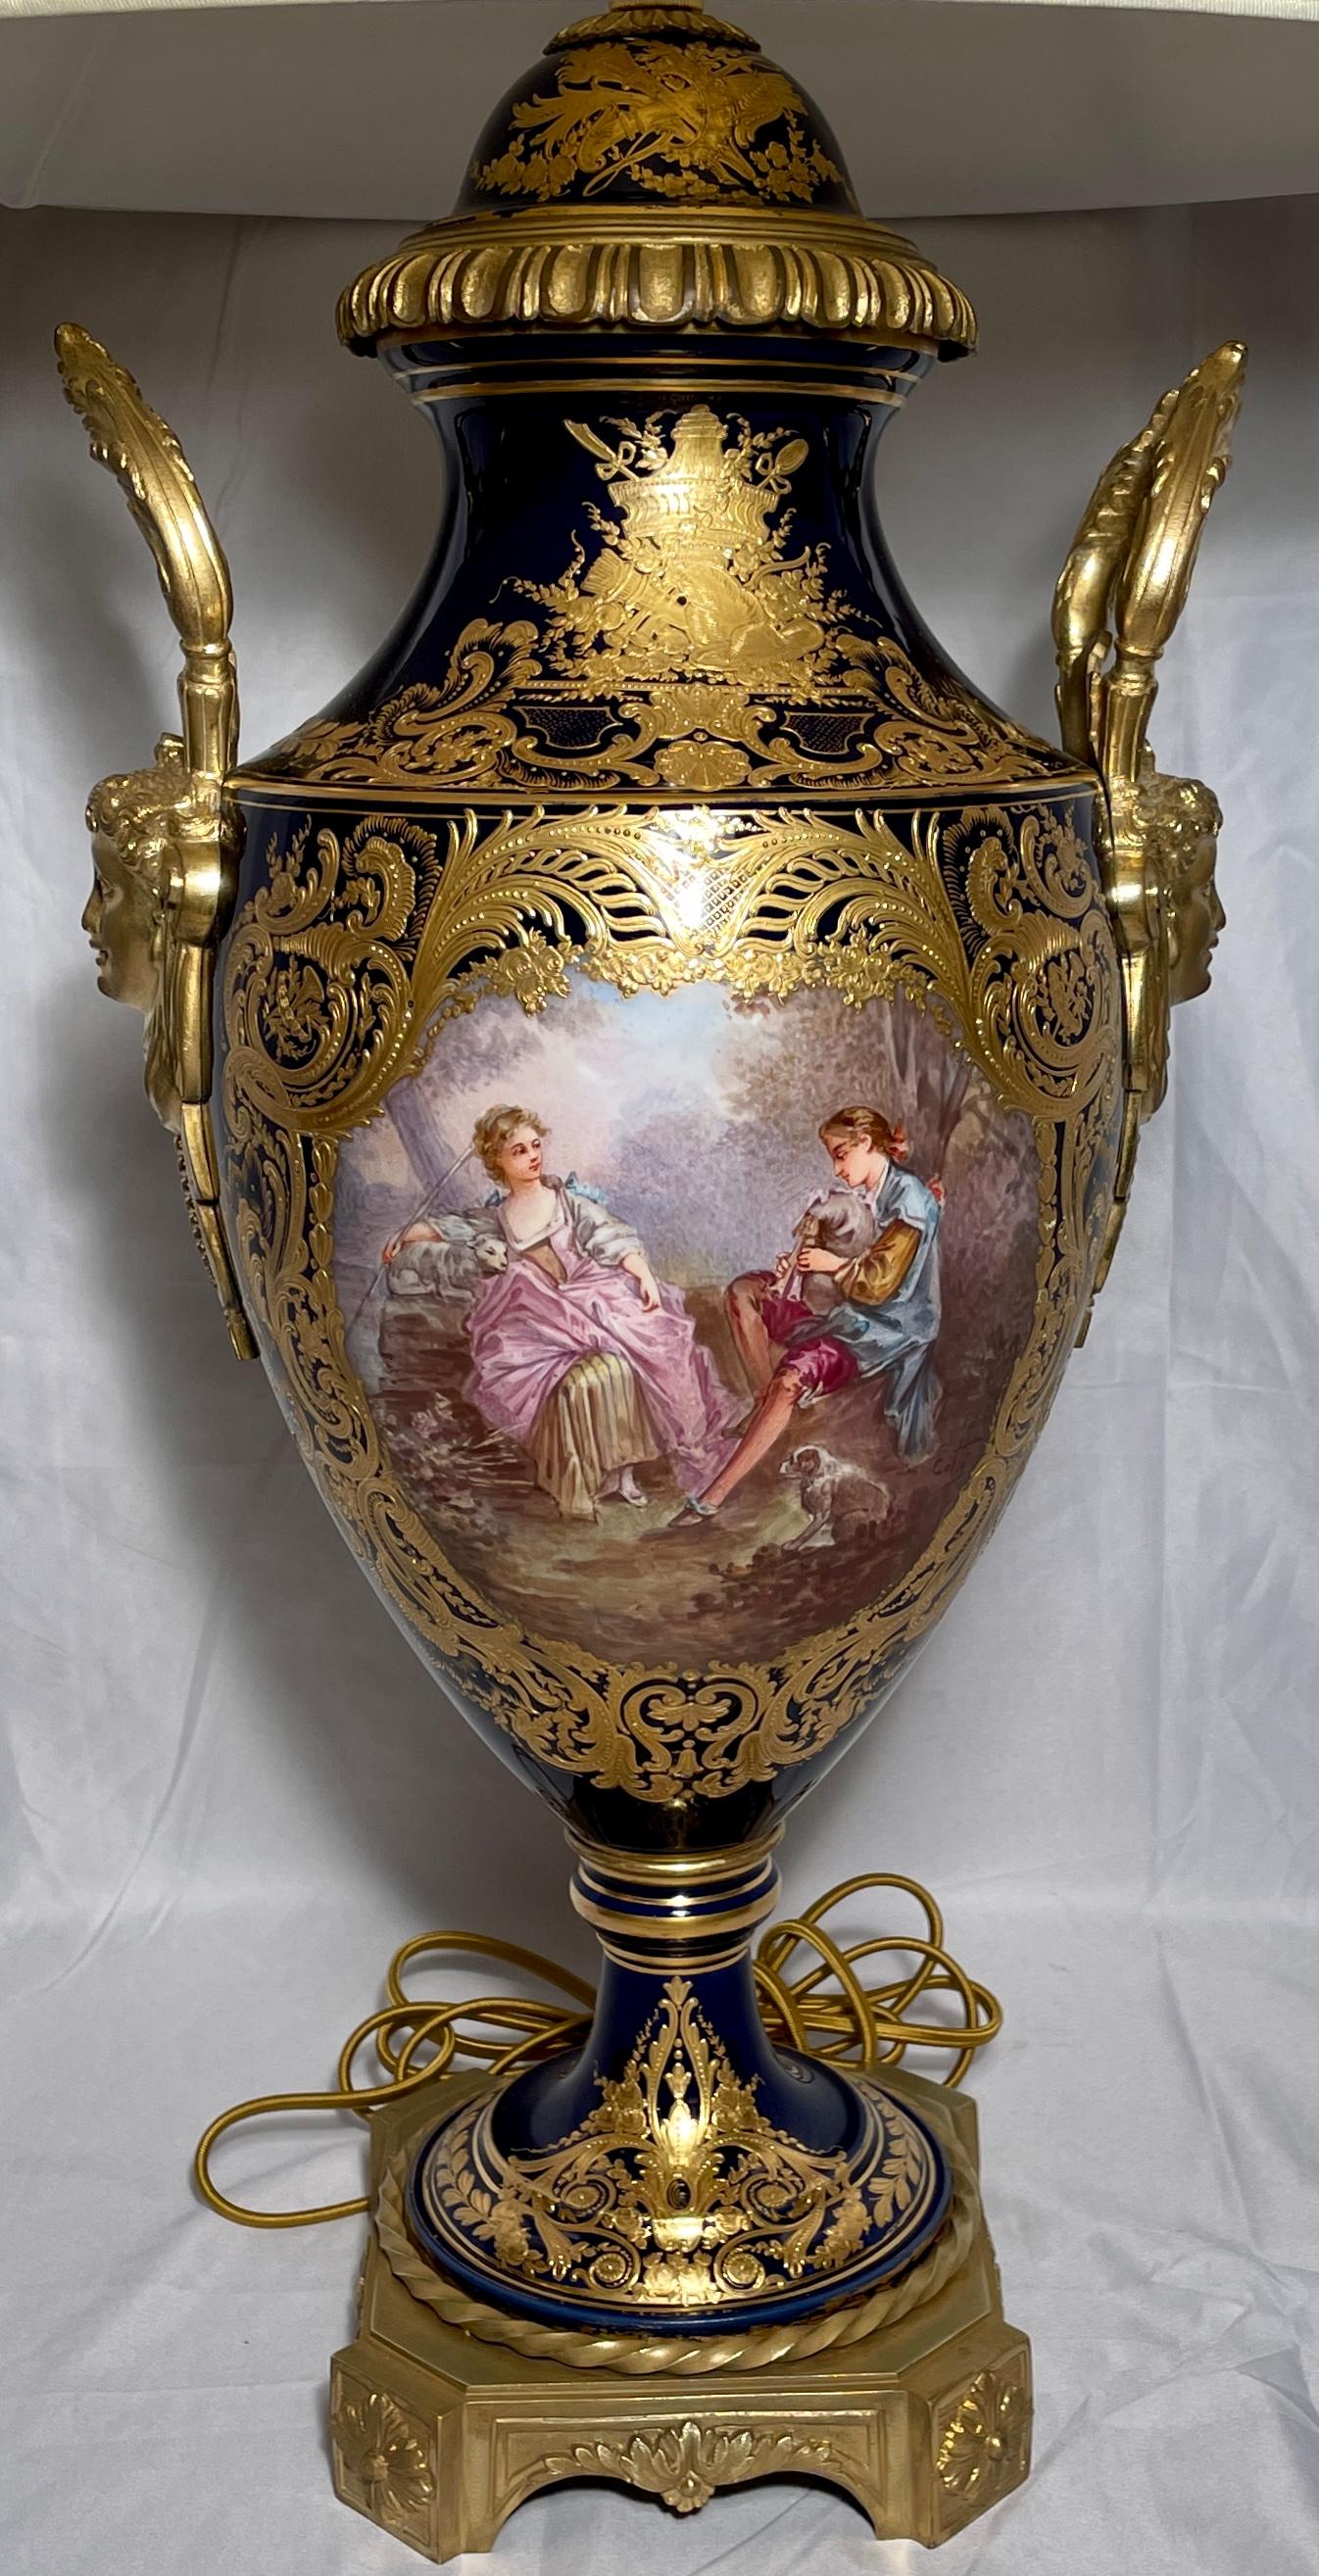 Exceptional antique French gold encrusted cobalt Sèvres porcelain urn converted to lamp.